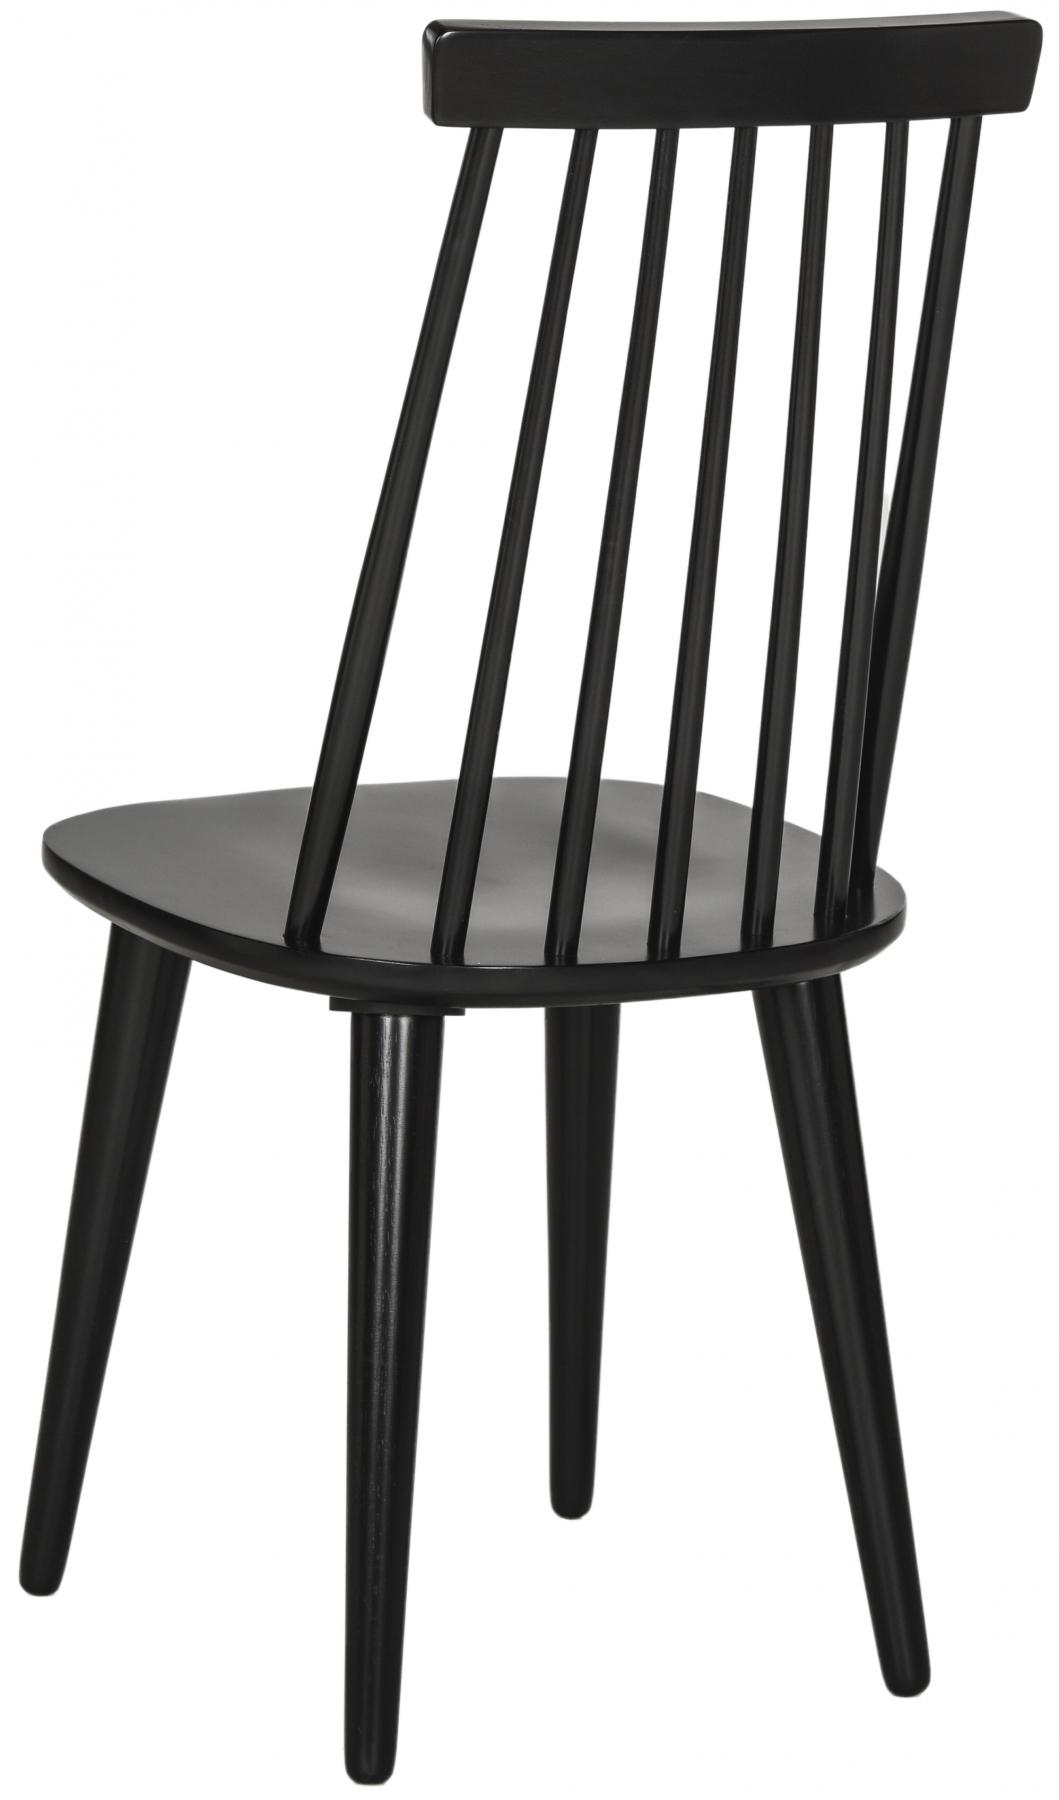 Steffon Spindle Side Chair, Black, Set of 2 - Image 3